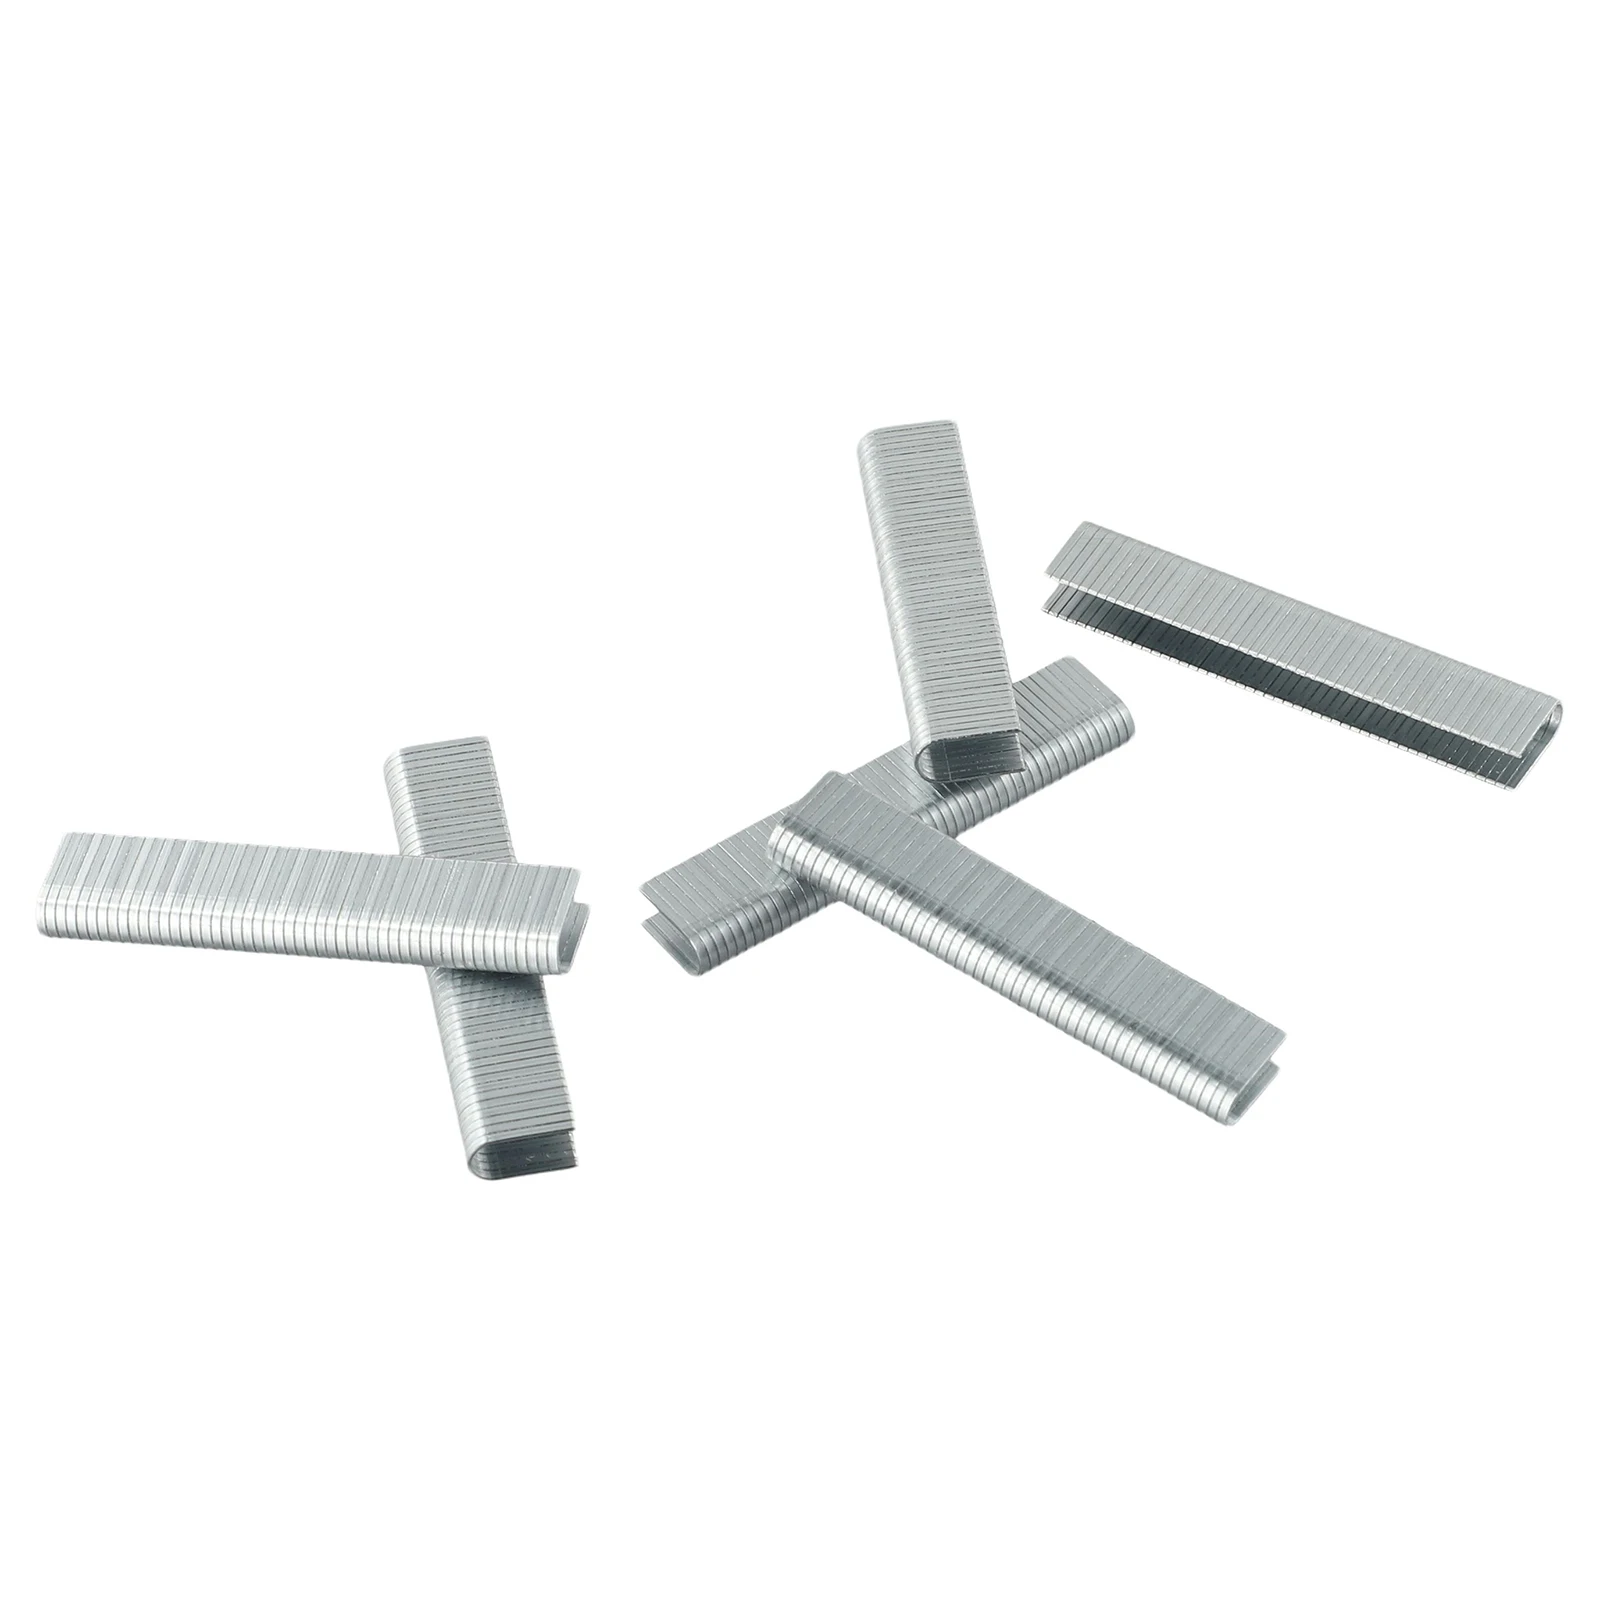 1000Pcs Staples Nails U/ Door /T Shaped Nail Shaped Stapler For Wood Furniture Household Use Herramientas 8/10/12mm Binding Tool